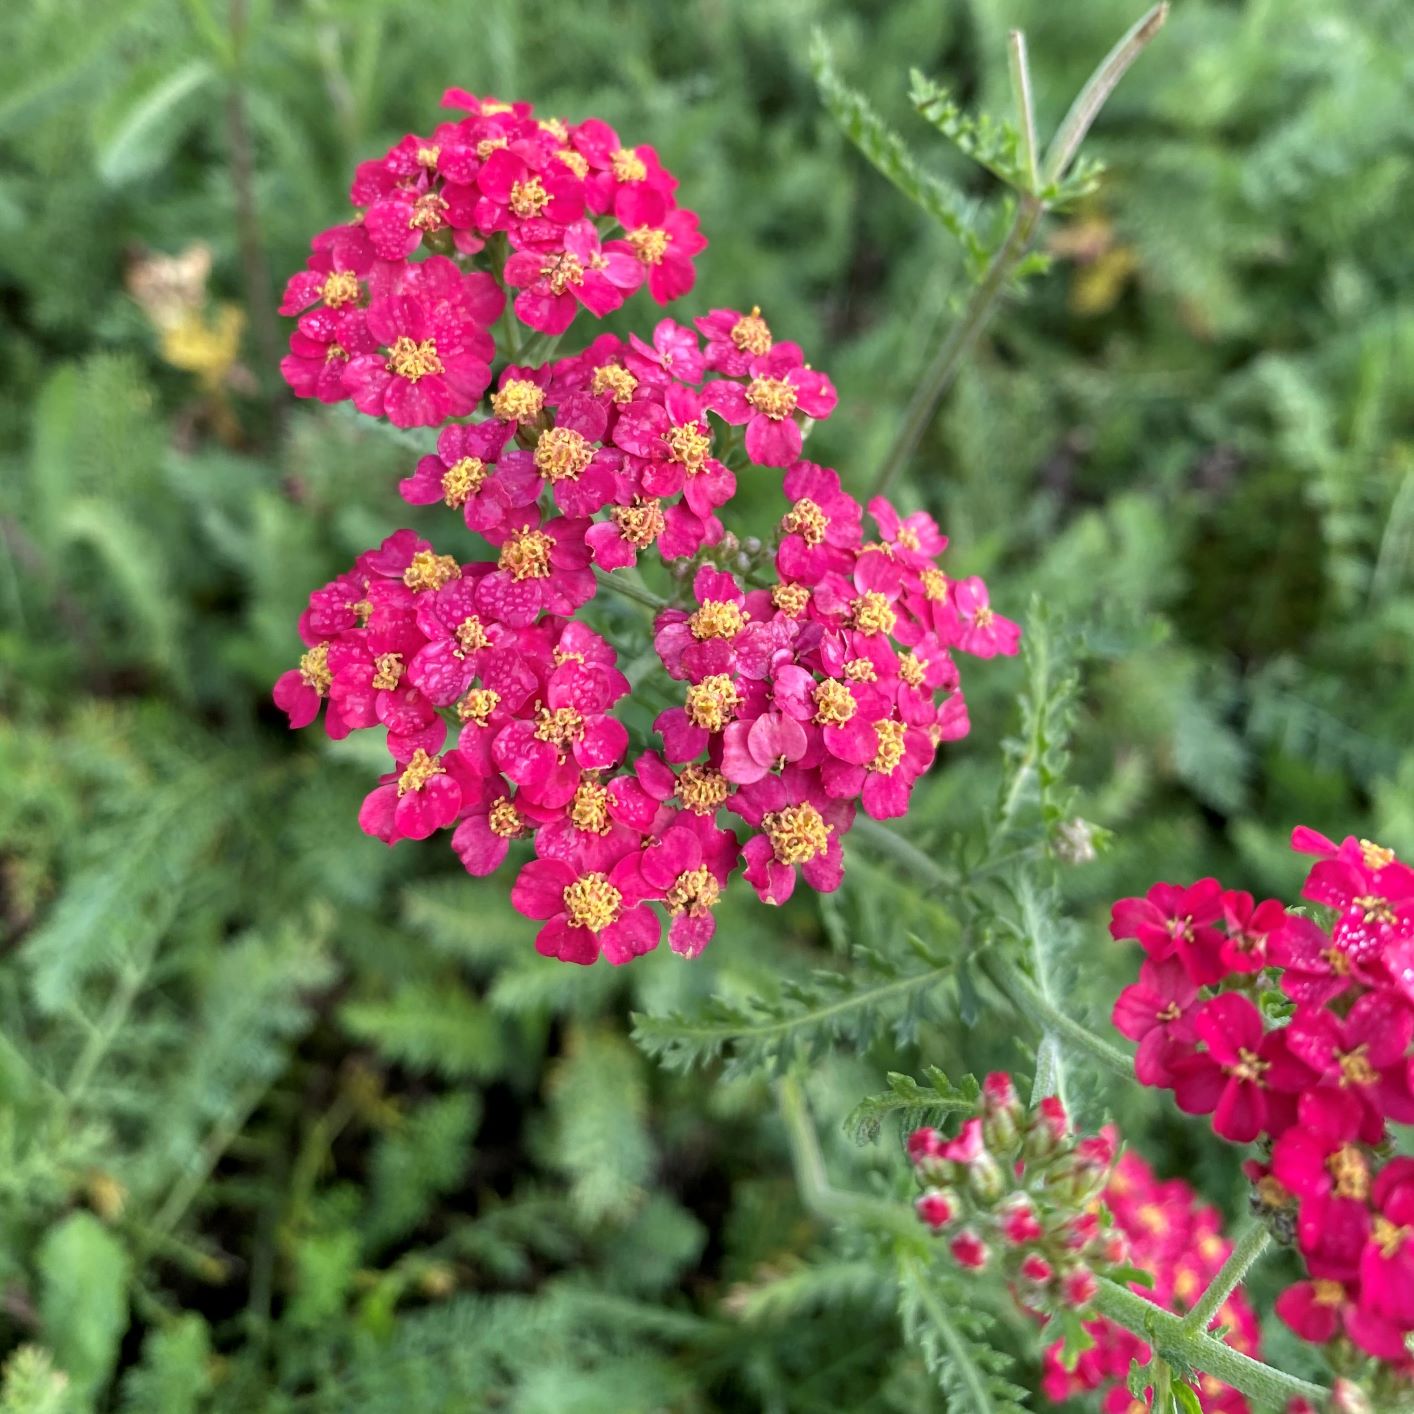 Red Velvet Yarrow, Achillea millefolium